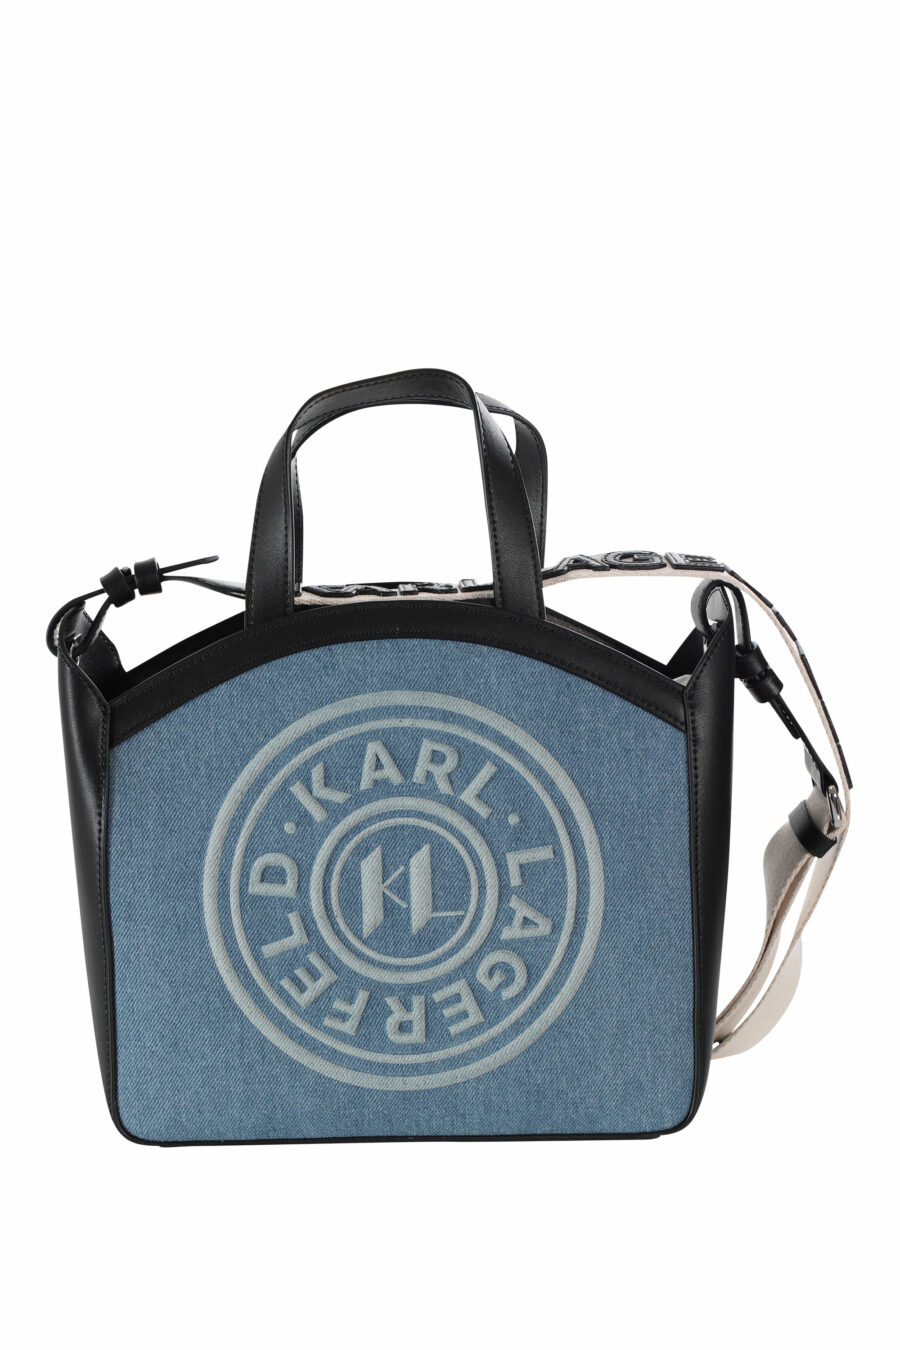 Tote bag azul con logo "k/circle" monocrómatico - 8720744234722